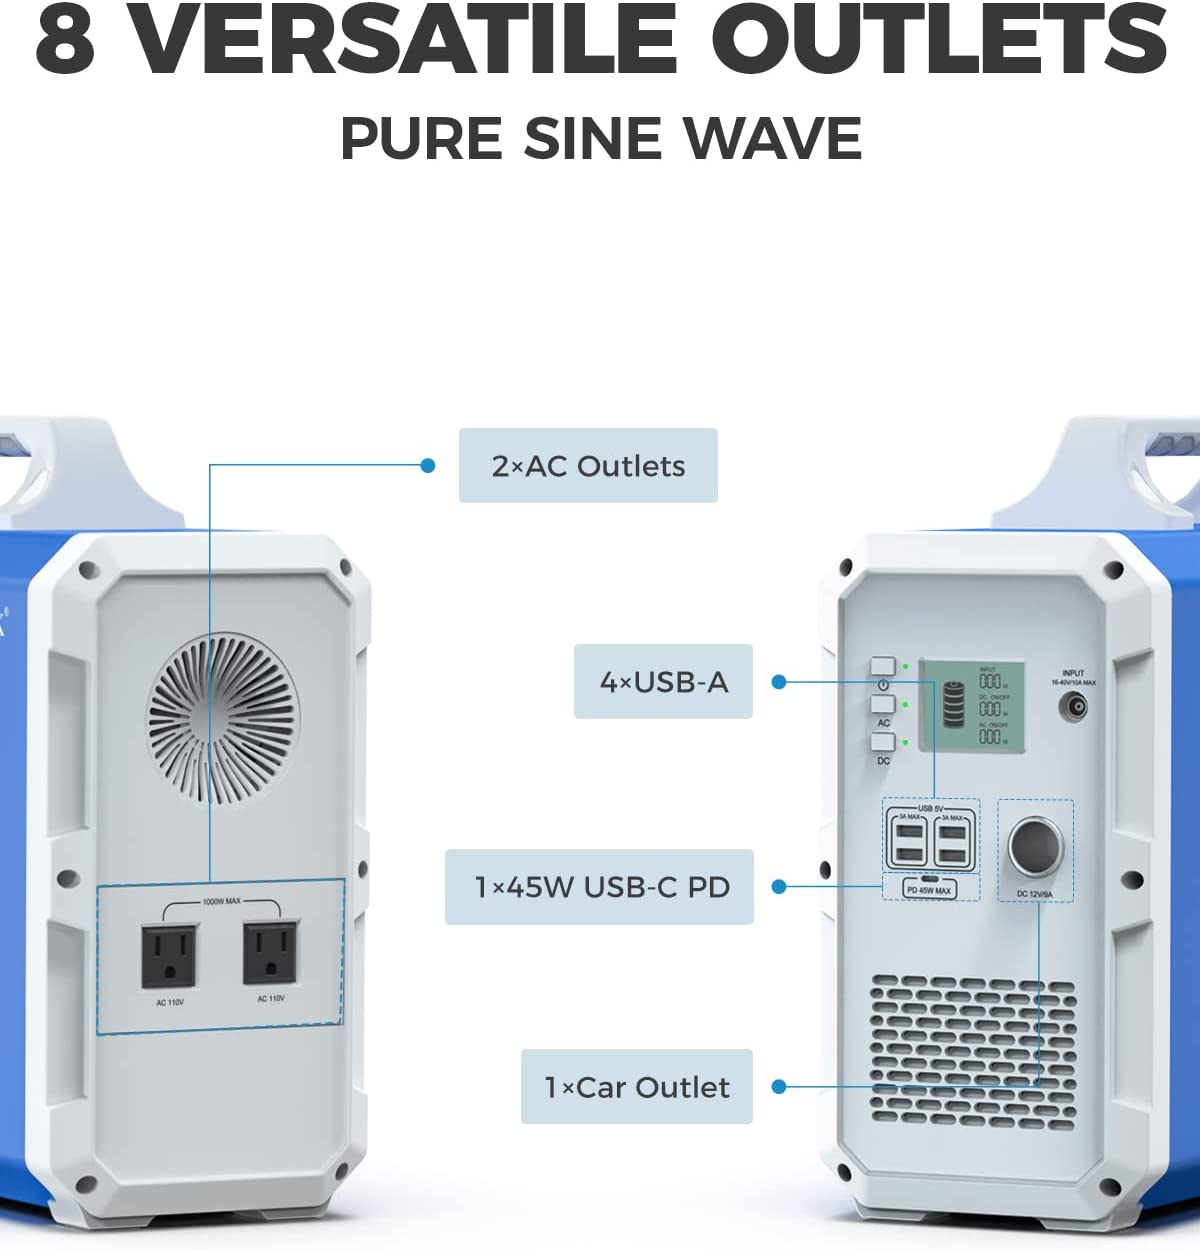 La planta electrica solar Bluetti EB240 2400Wh tiene 8 receptaculos versatiles pura onda pure sine wave.